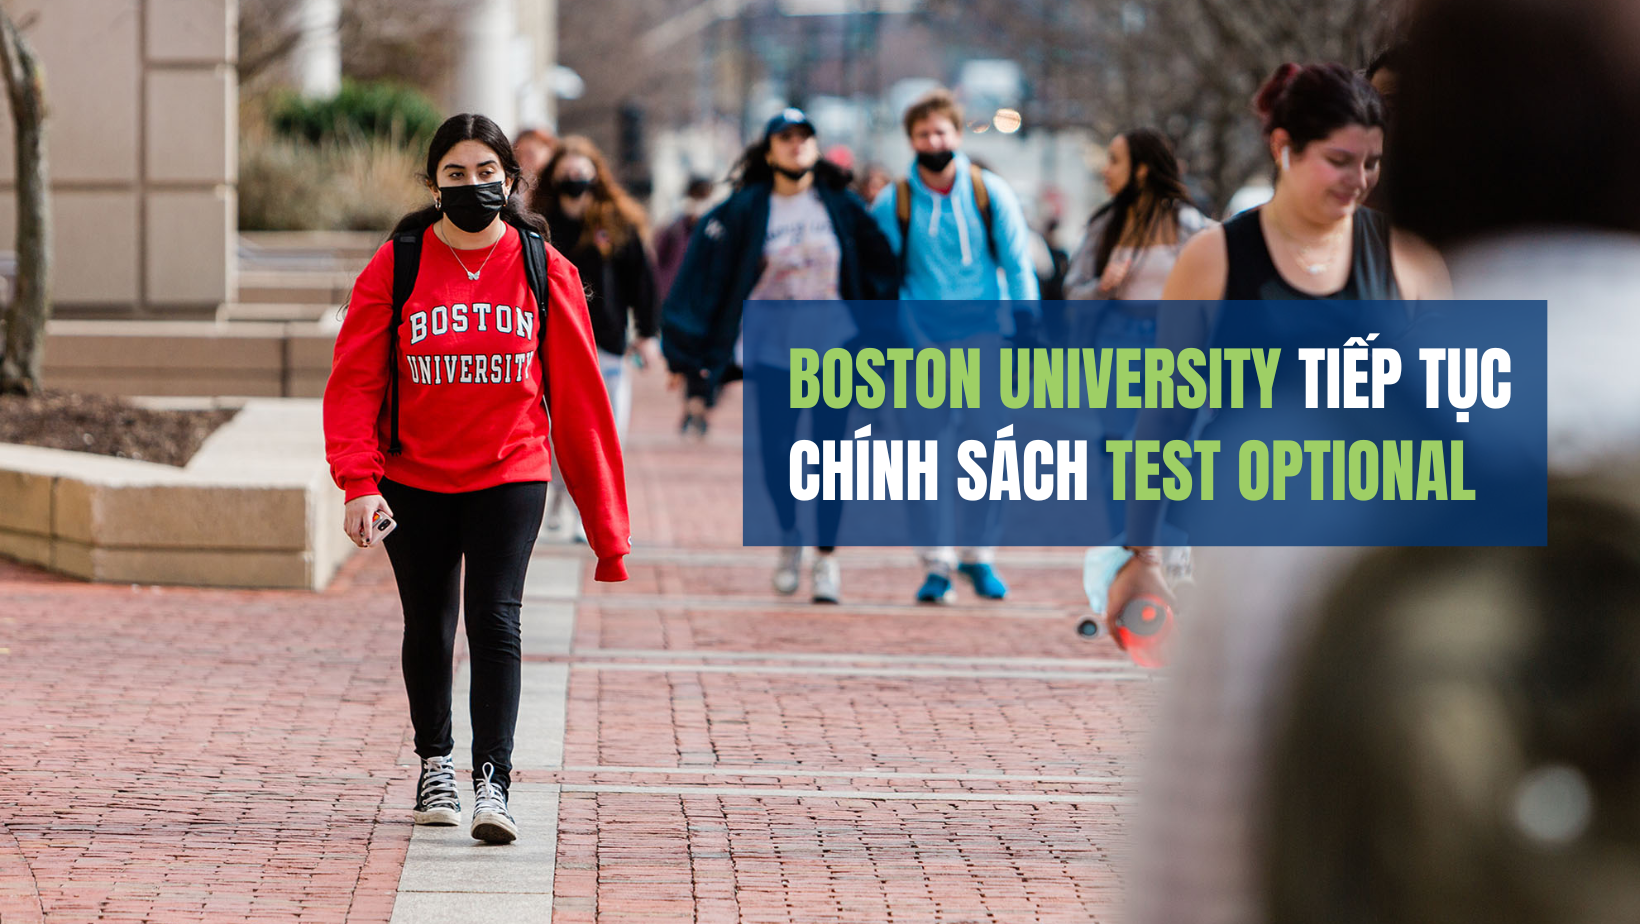 Boston University tiếp tục chính sách test optional